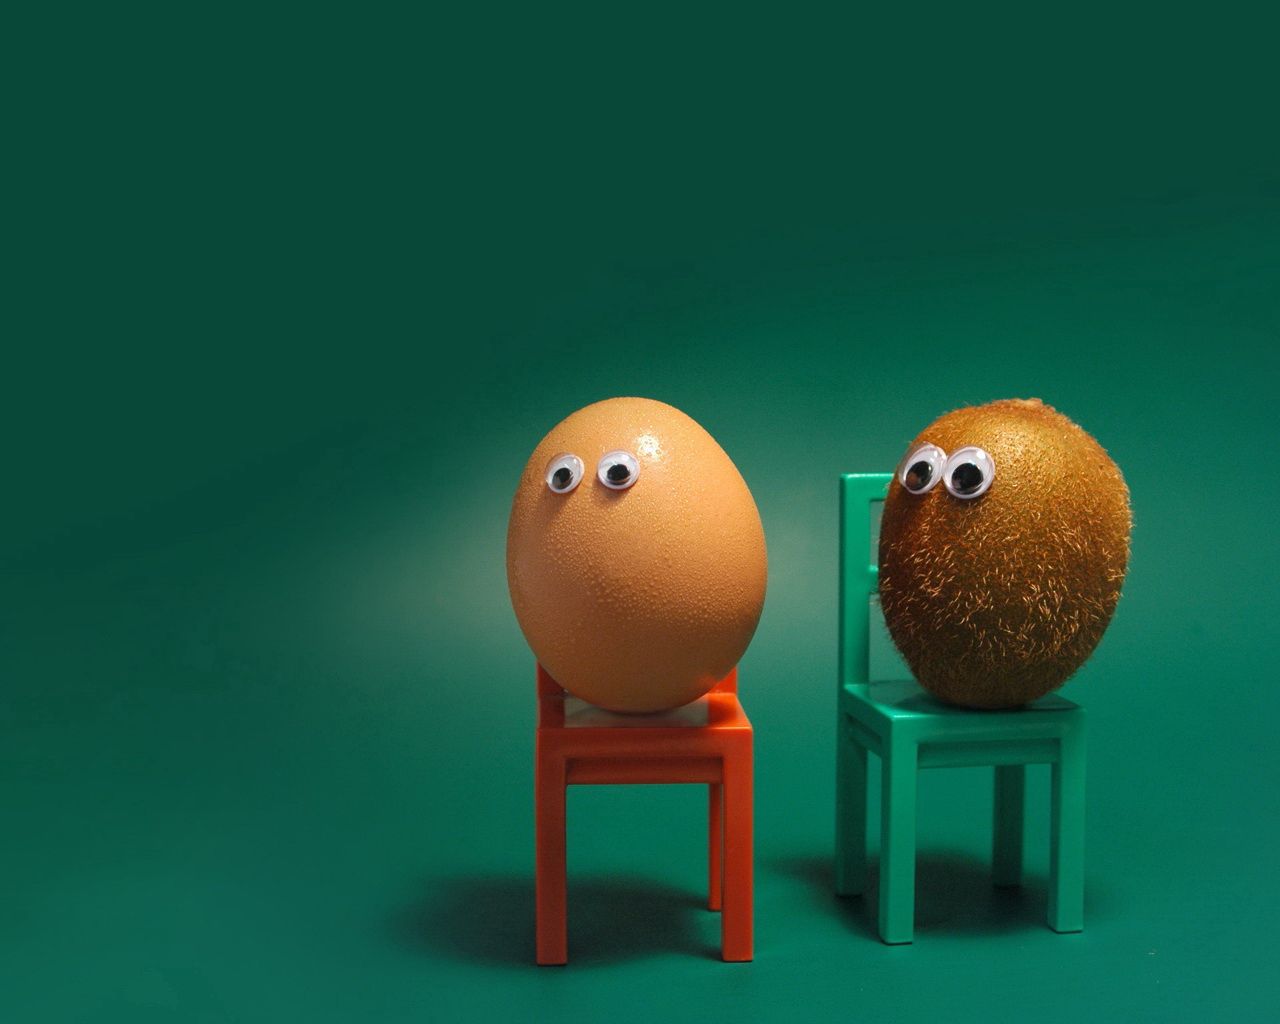 egg, miscellaneous, funny, kiwi, miscellanea, eyes, chairs, situation cellphone